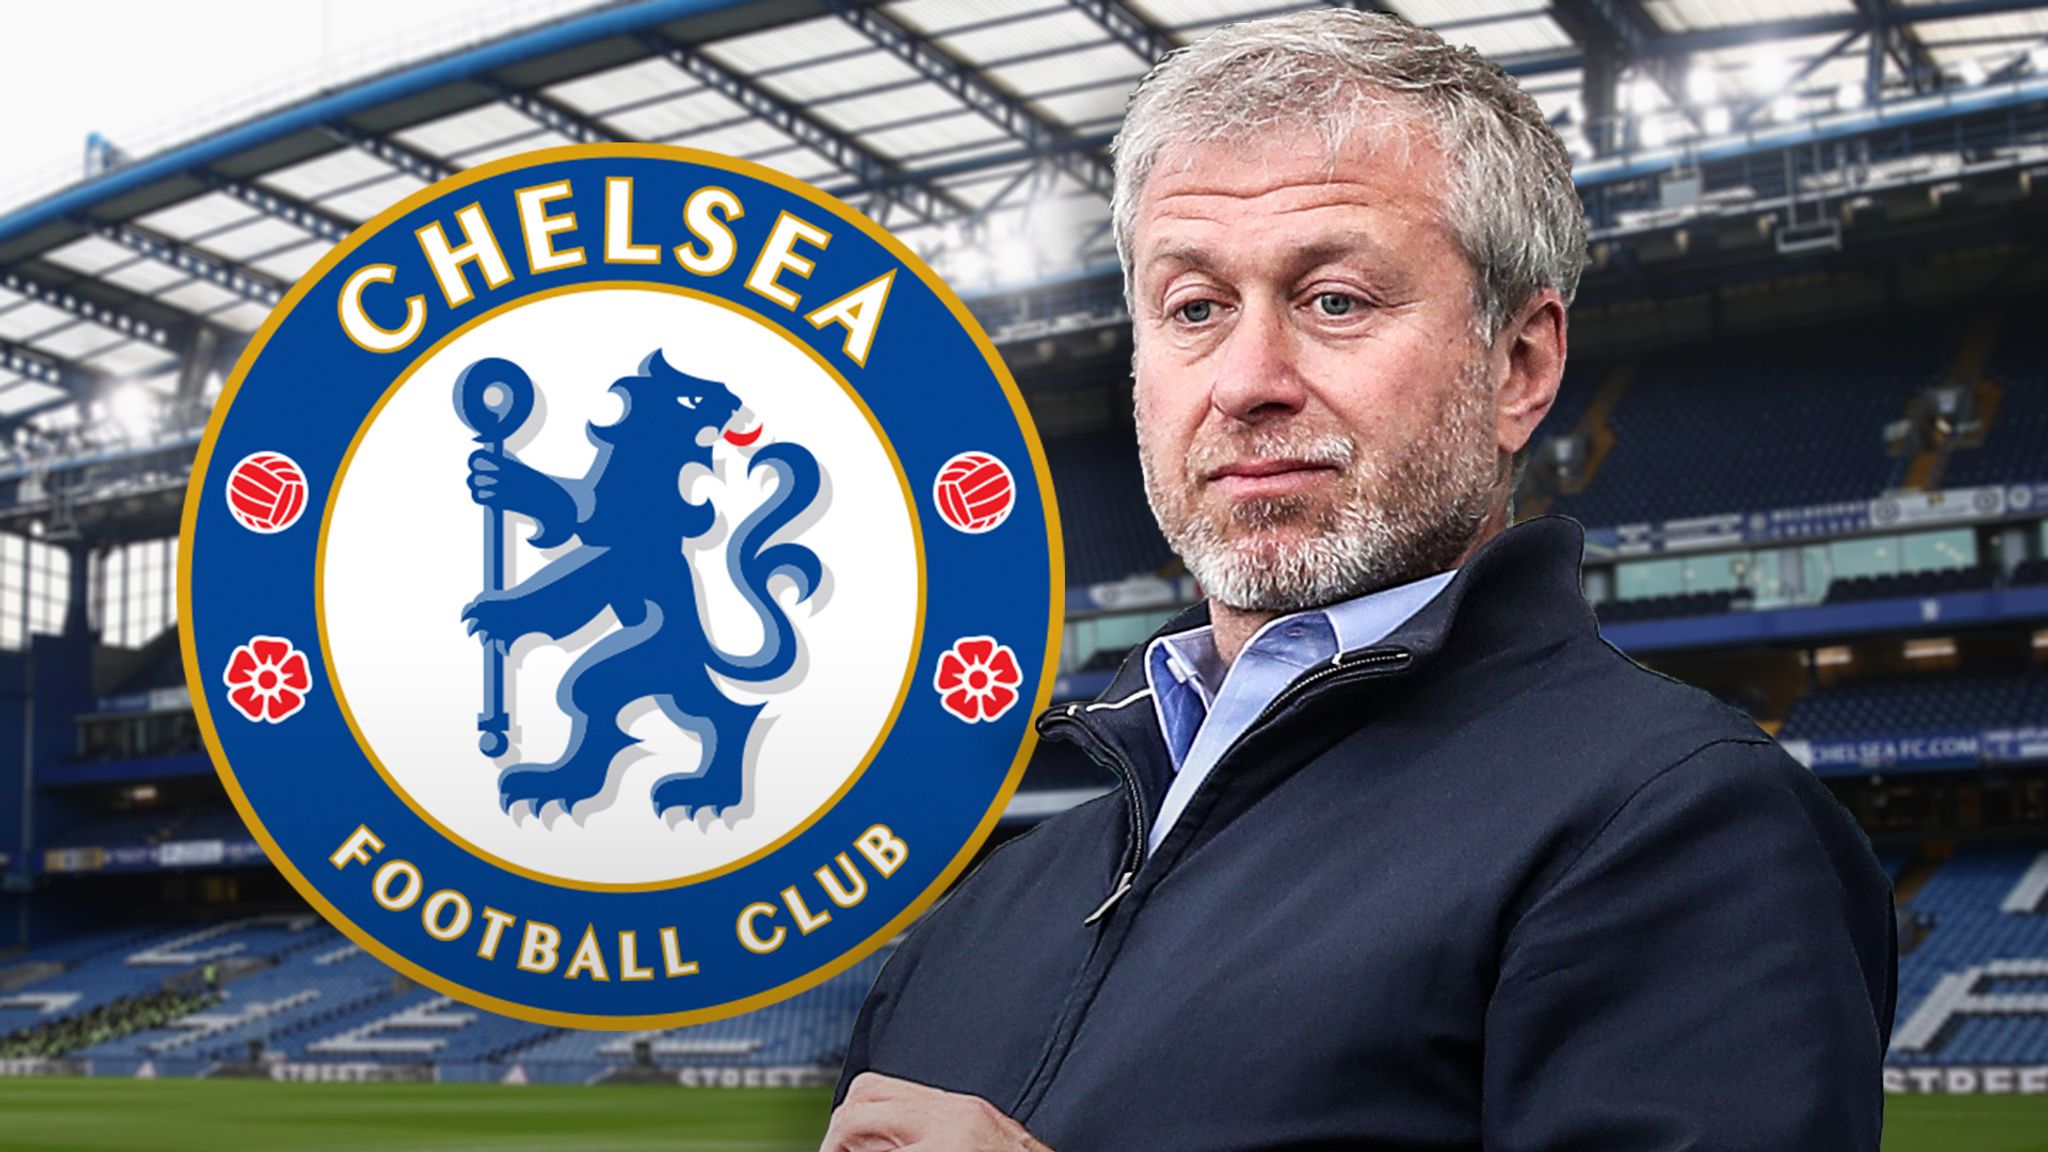 Futebol: Roman Abramovich confirma que quer vender o Chelsea Football Club